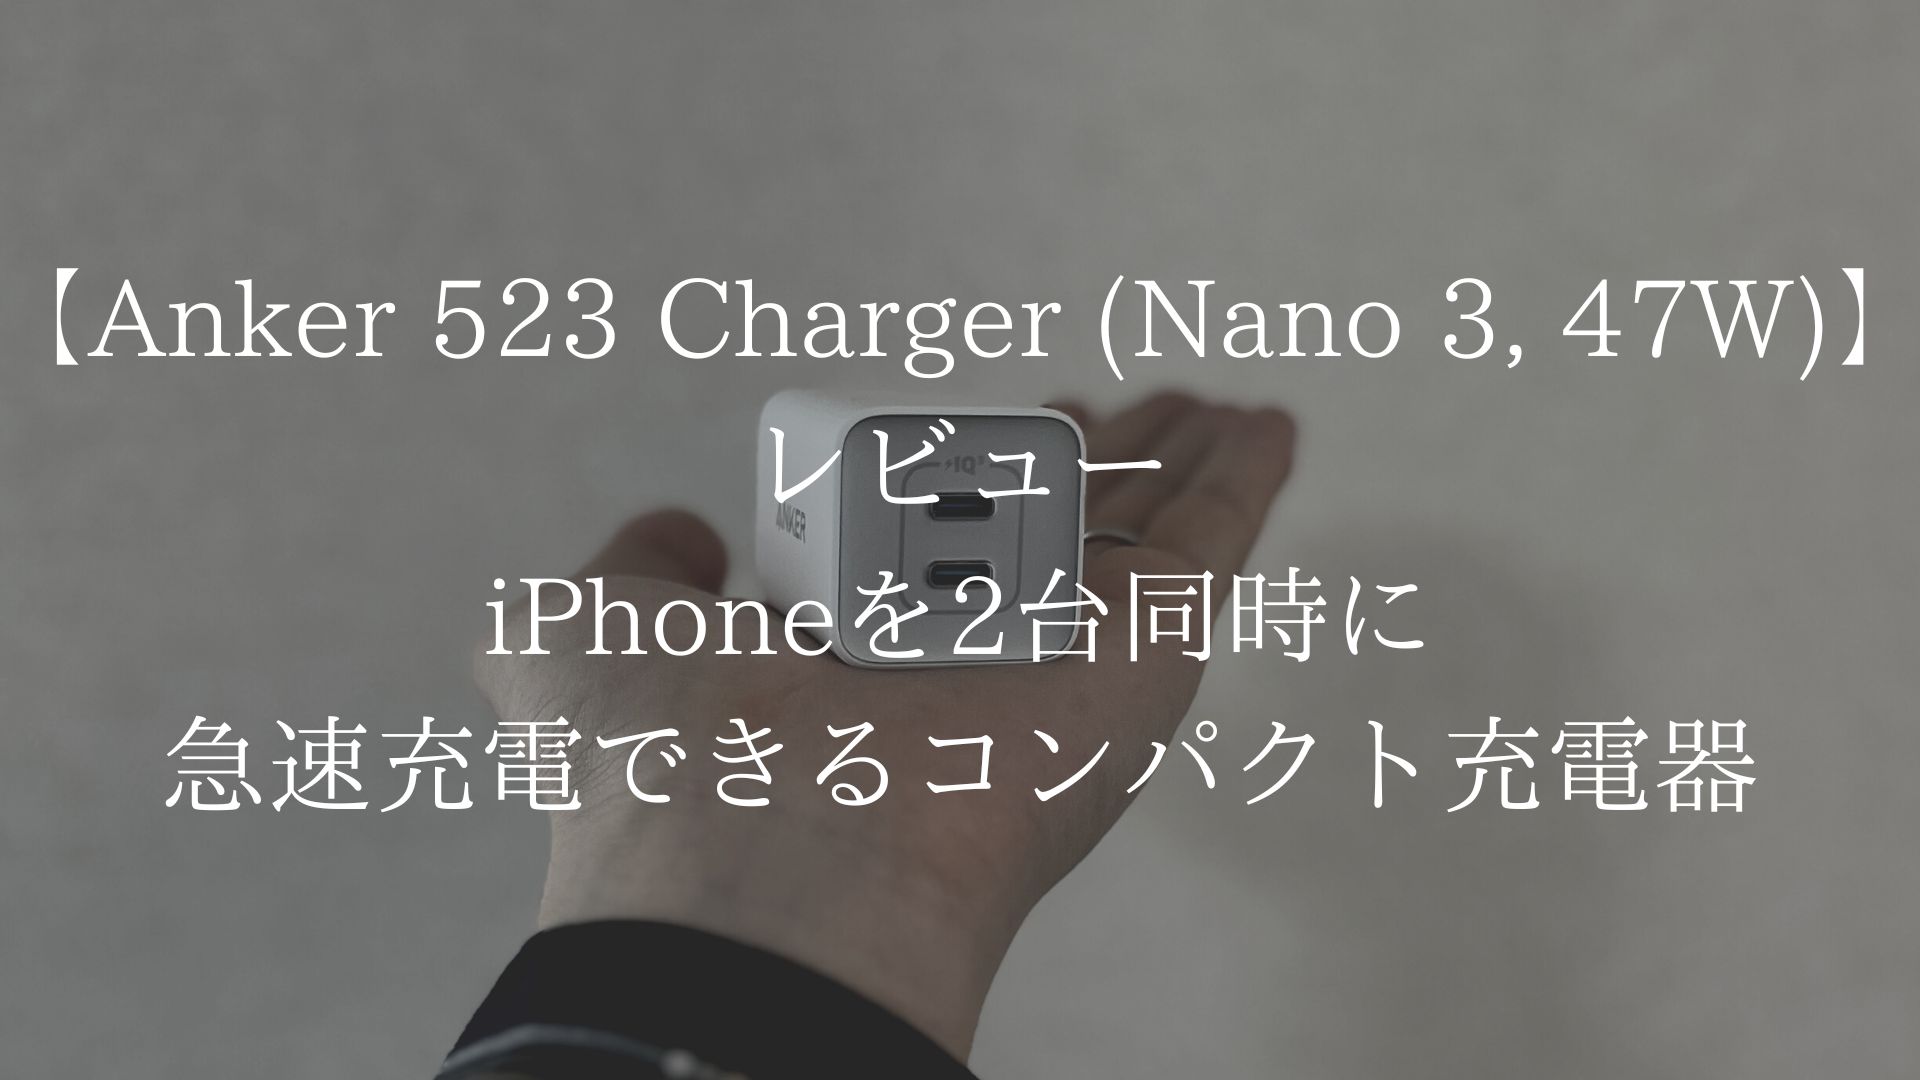 Anker 523 Charger (Nano 3, 47W)のアイキャッチ画像